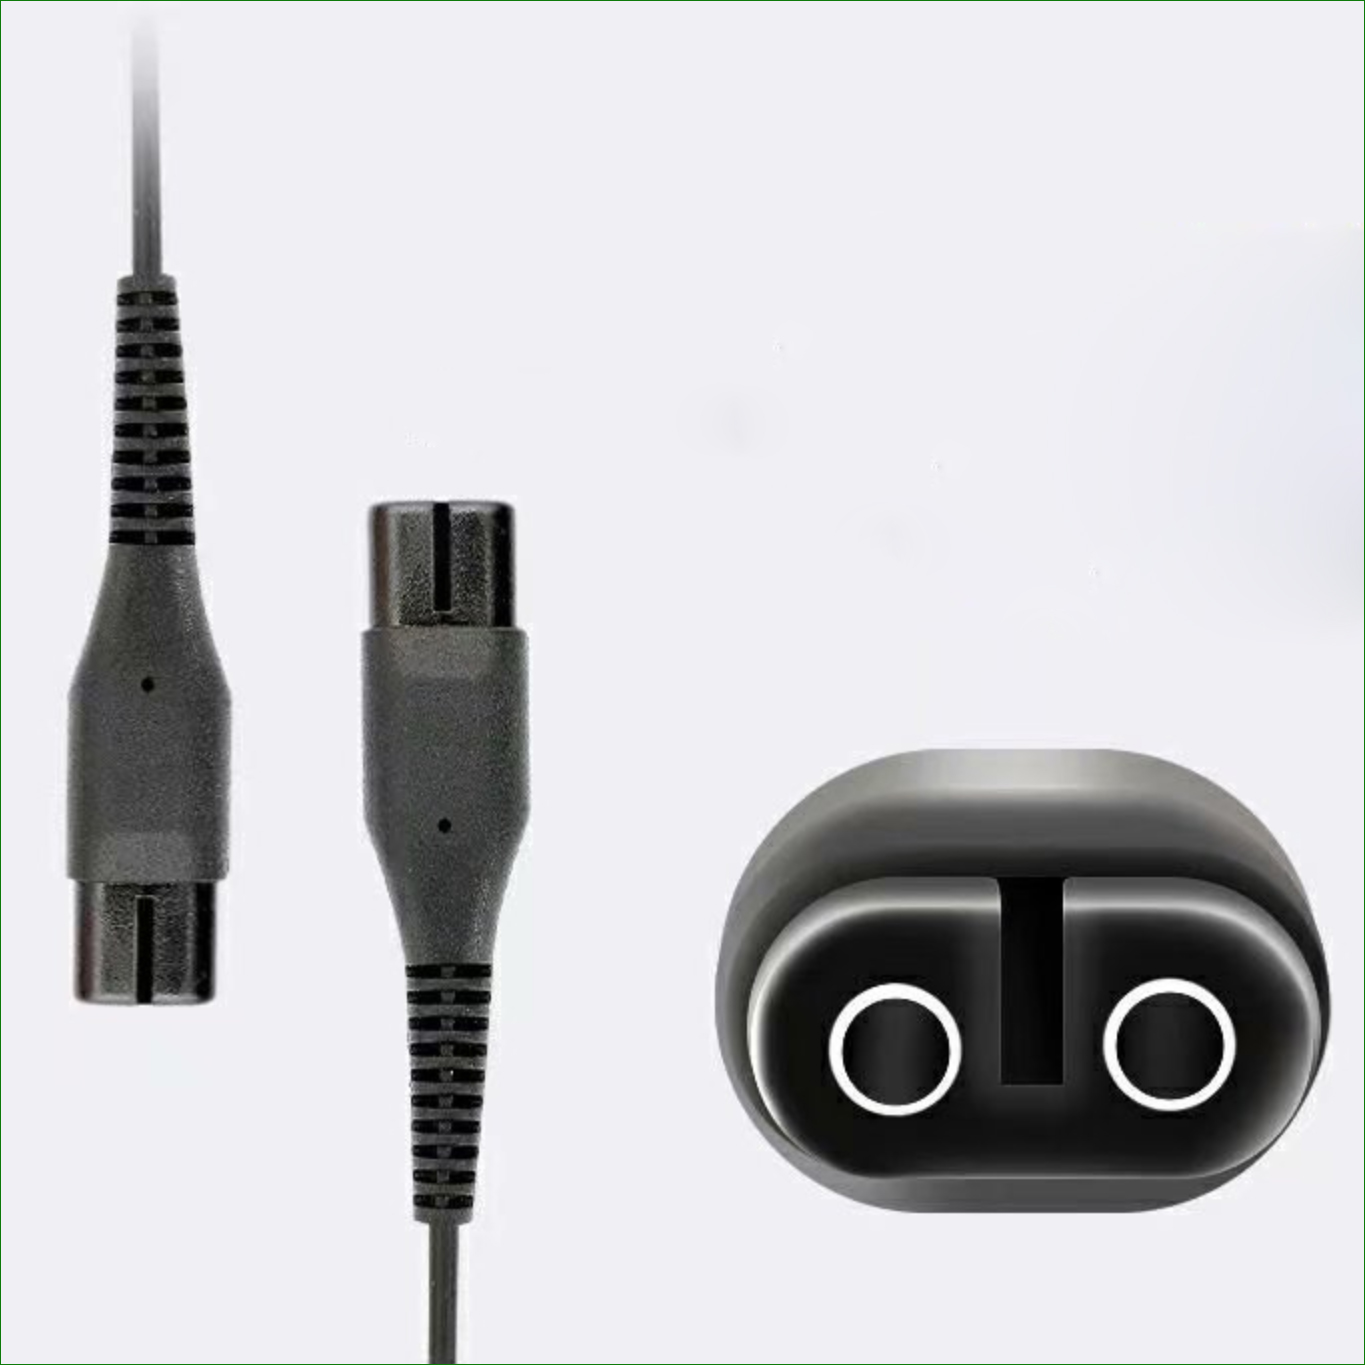 A00390 4.3V EU US Wall Plug AC Power Adapter Charger for Philips Shaver QP2510 QP2511 QP2512 QP2513 QP2520/70 QP2520/71 YQ318